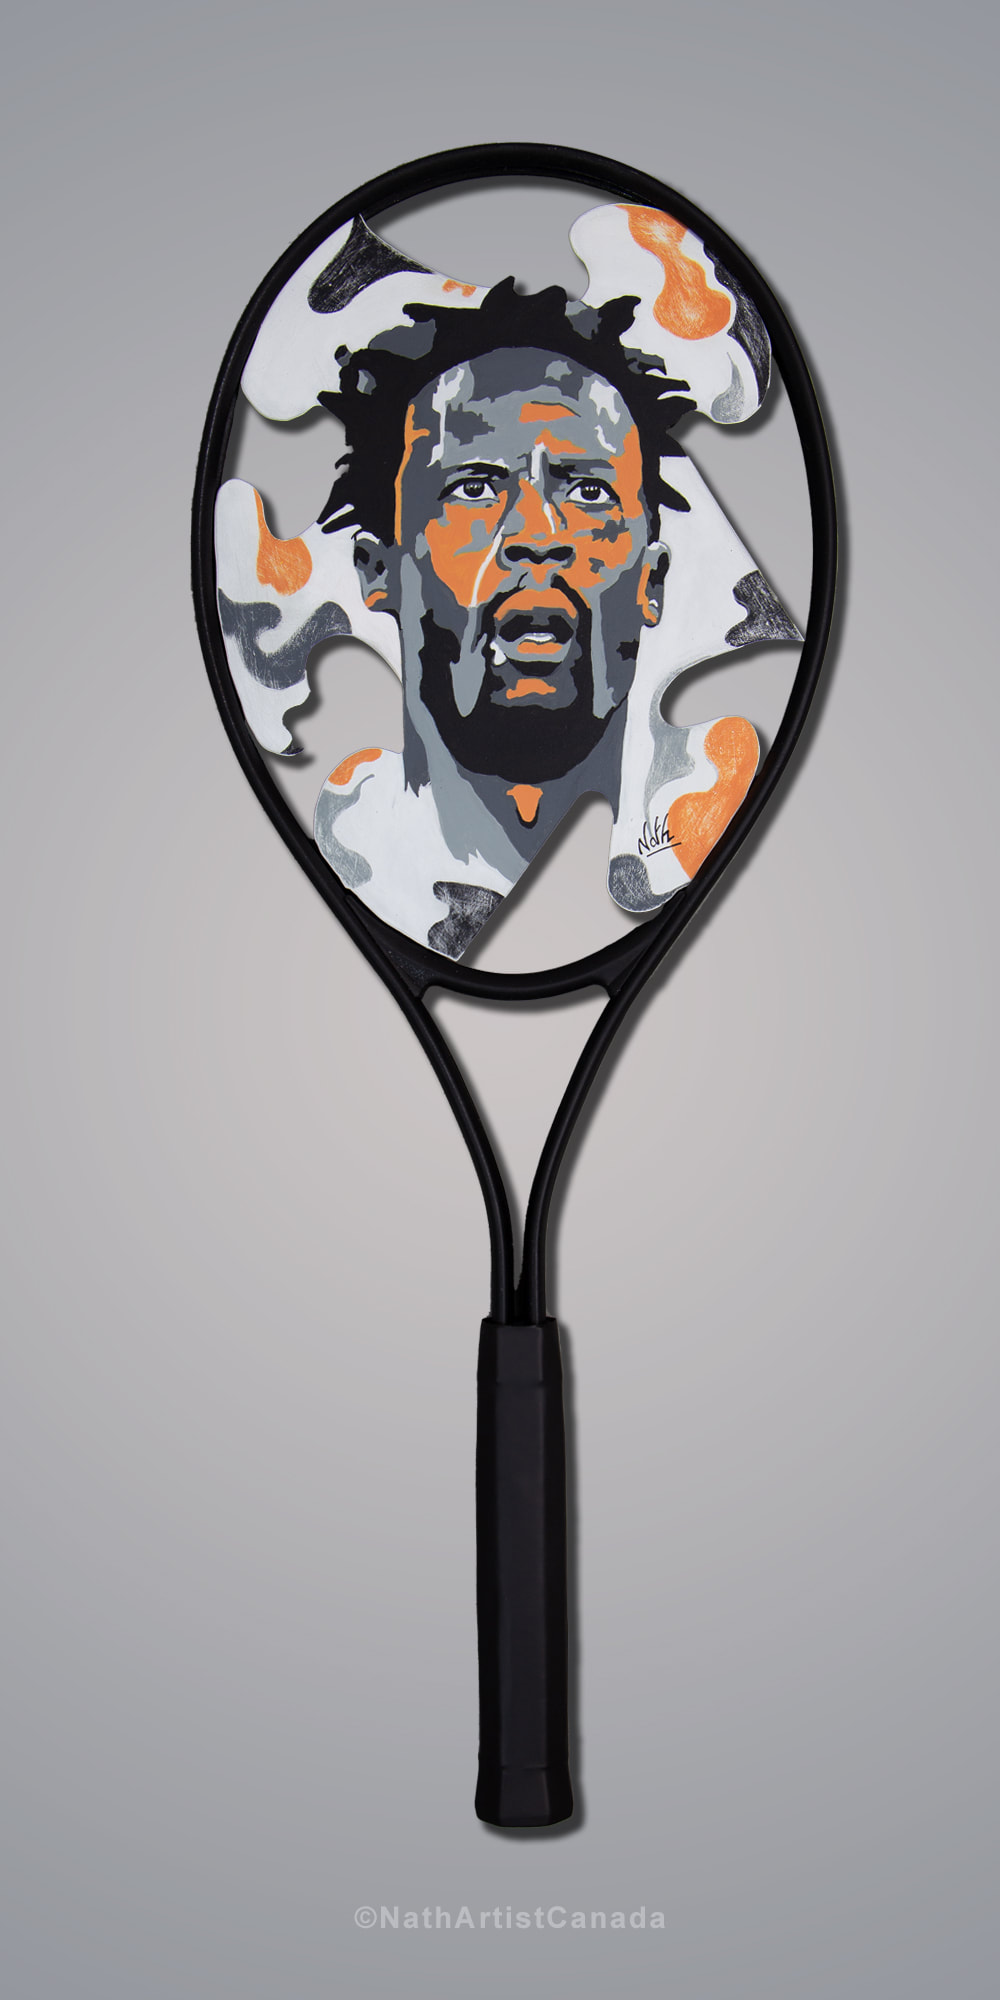 Gael Monfils collectible tennis art